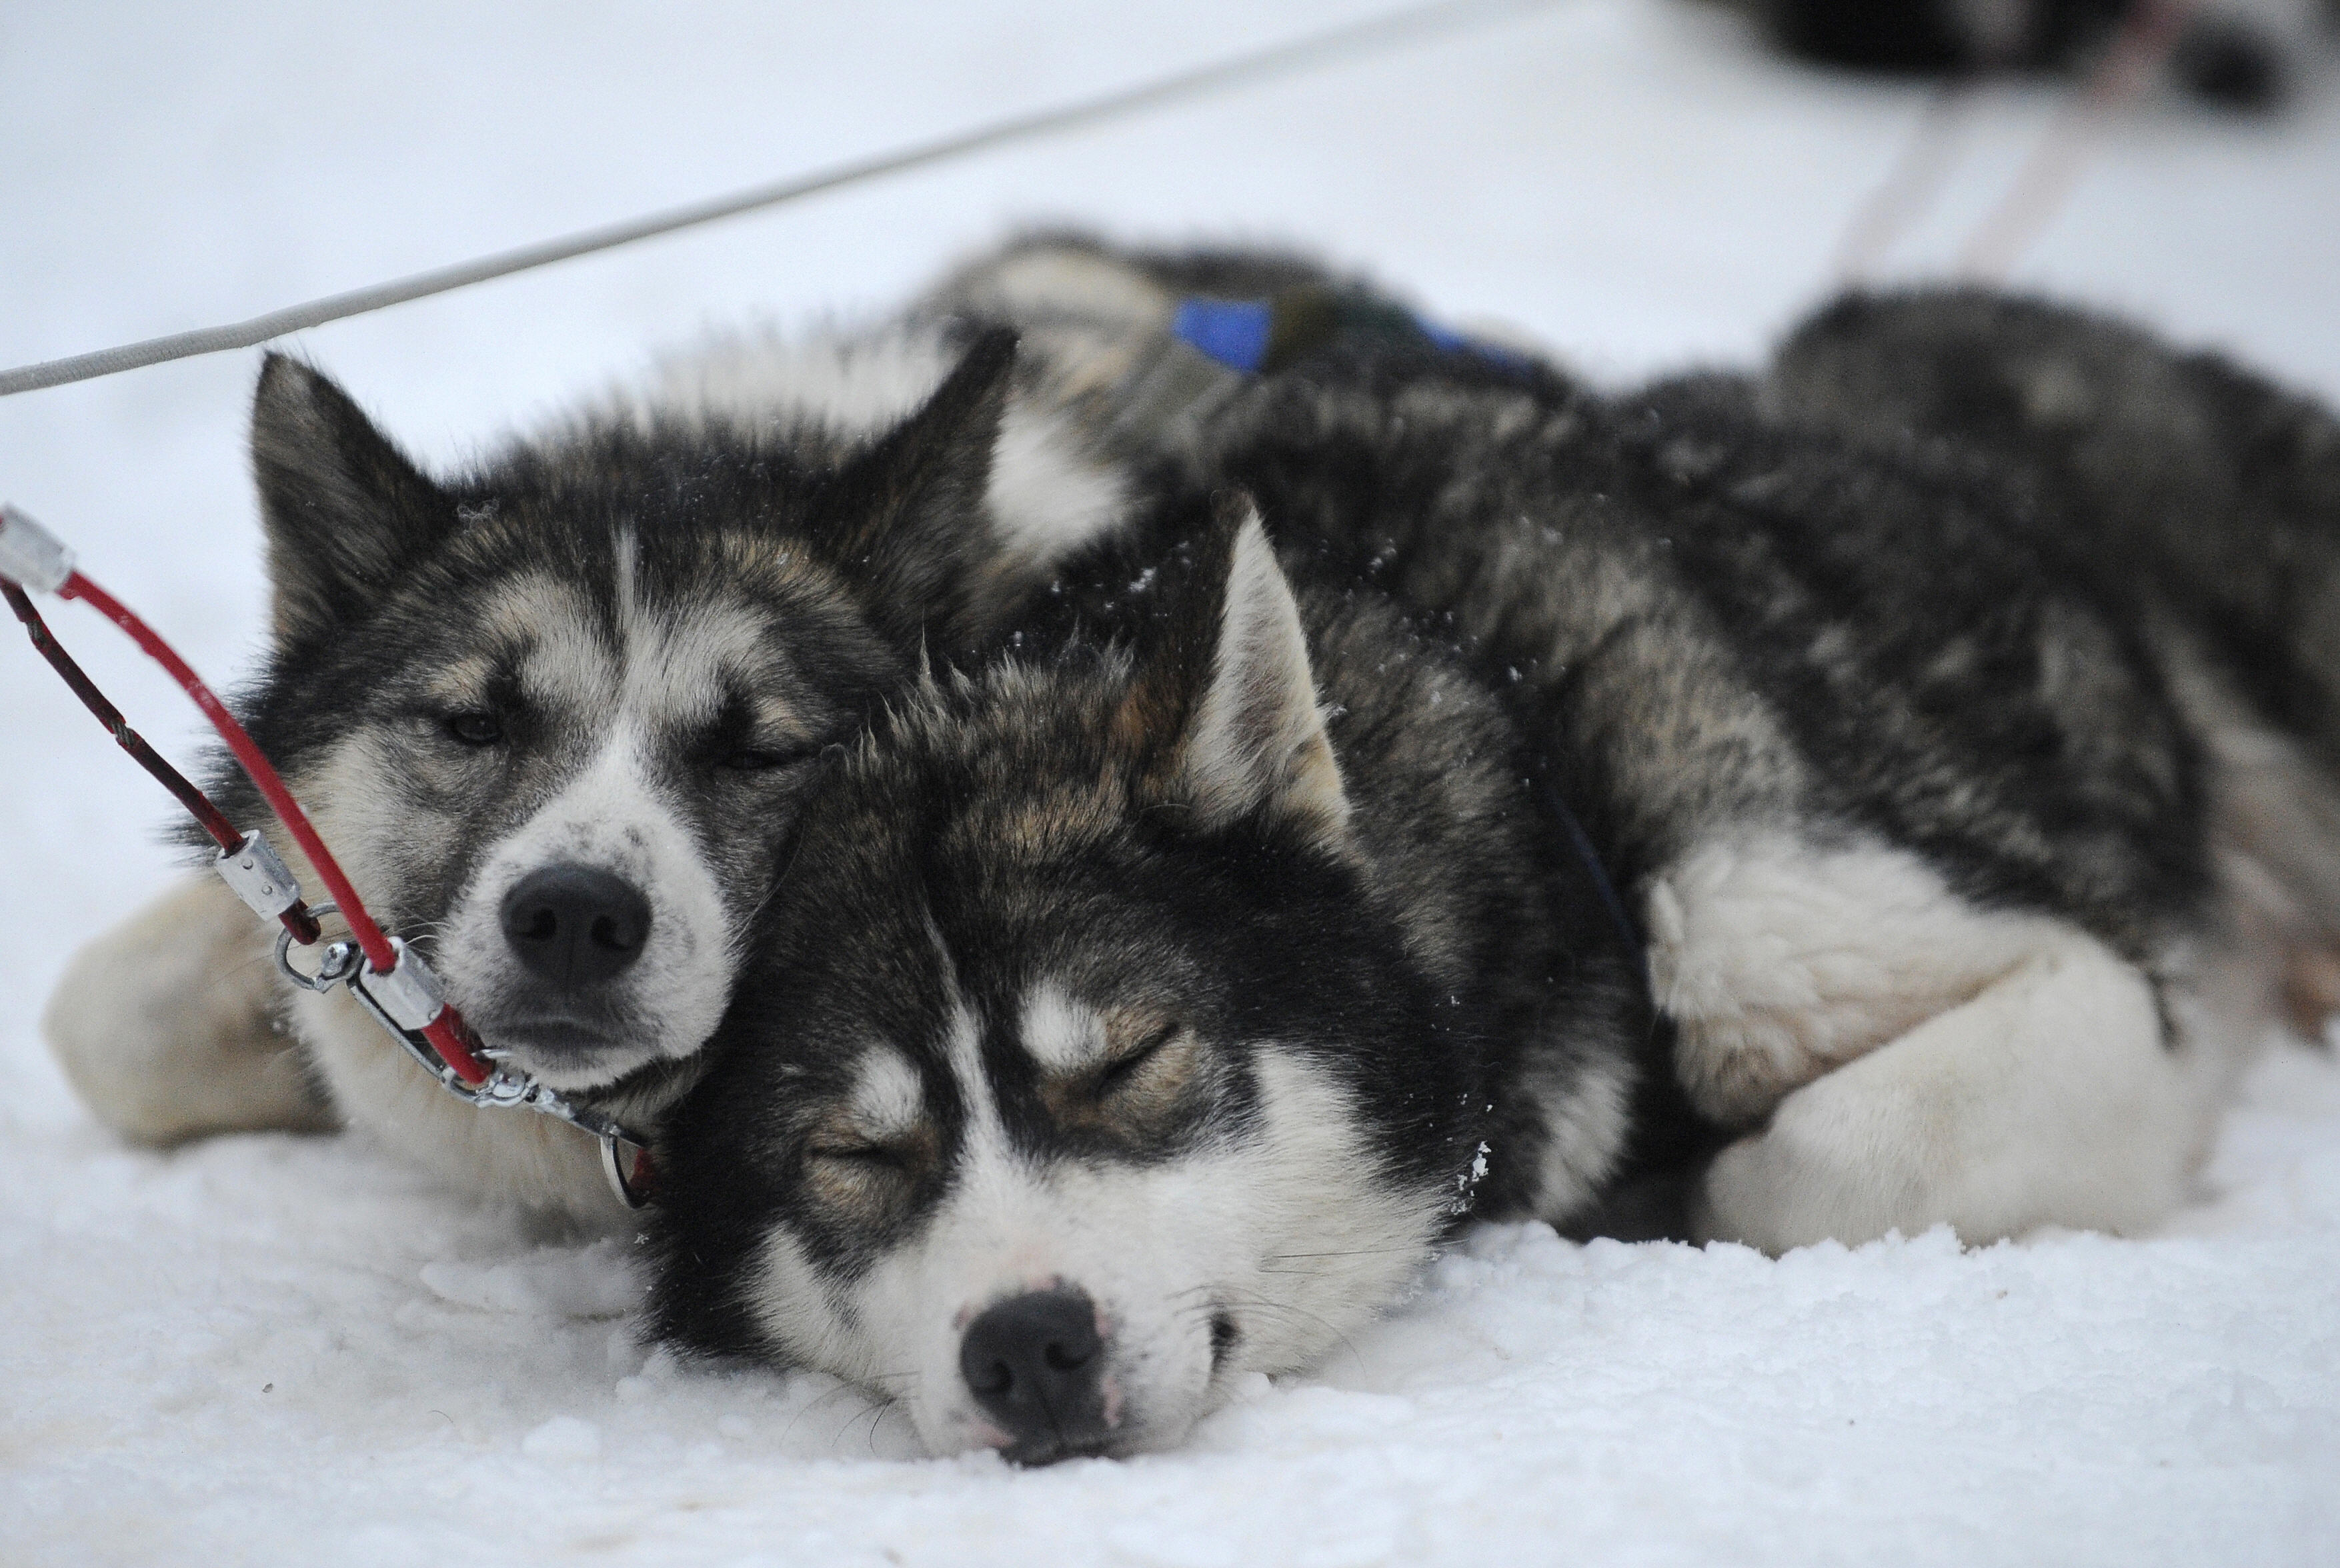 Siberian Huskies at rest. (OLIVIER MORIN/AFP/Getty Images)